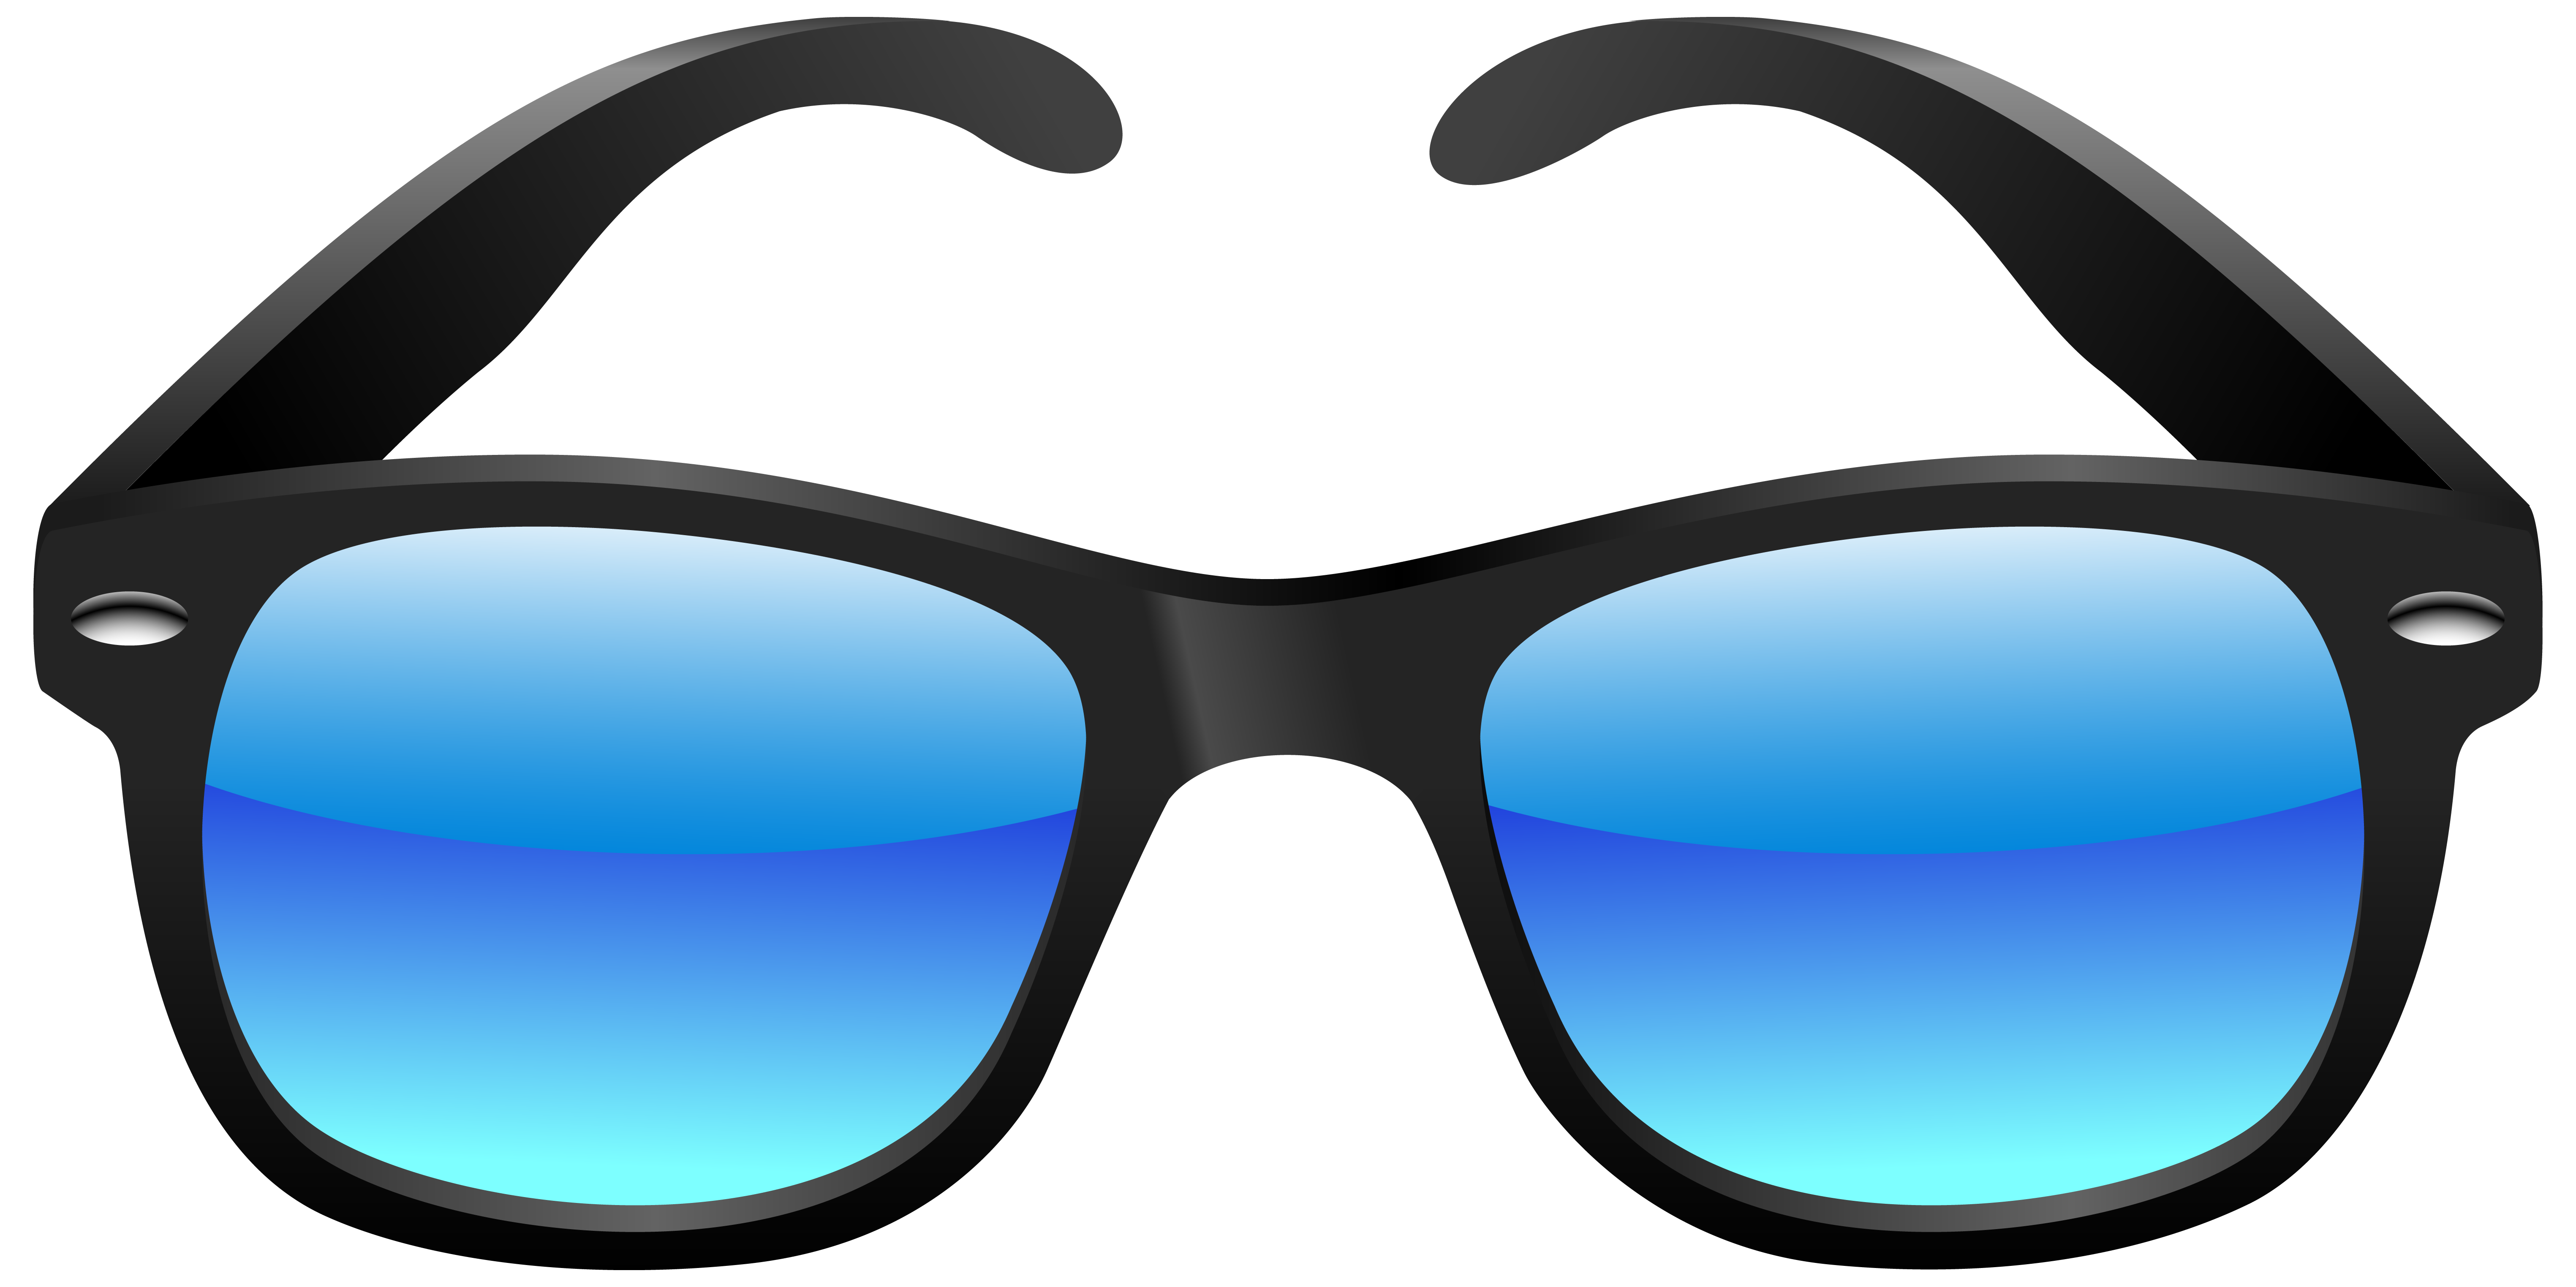 Sunglasses Eyewear Shutter shades Clip art - Sunglasses png download